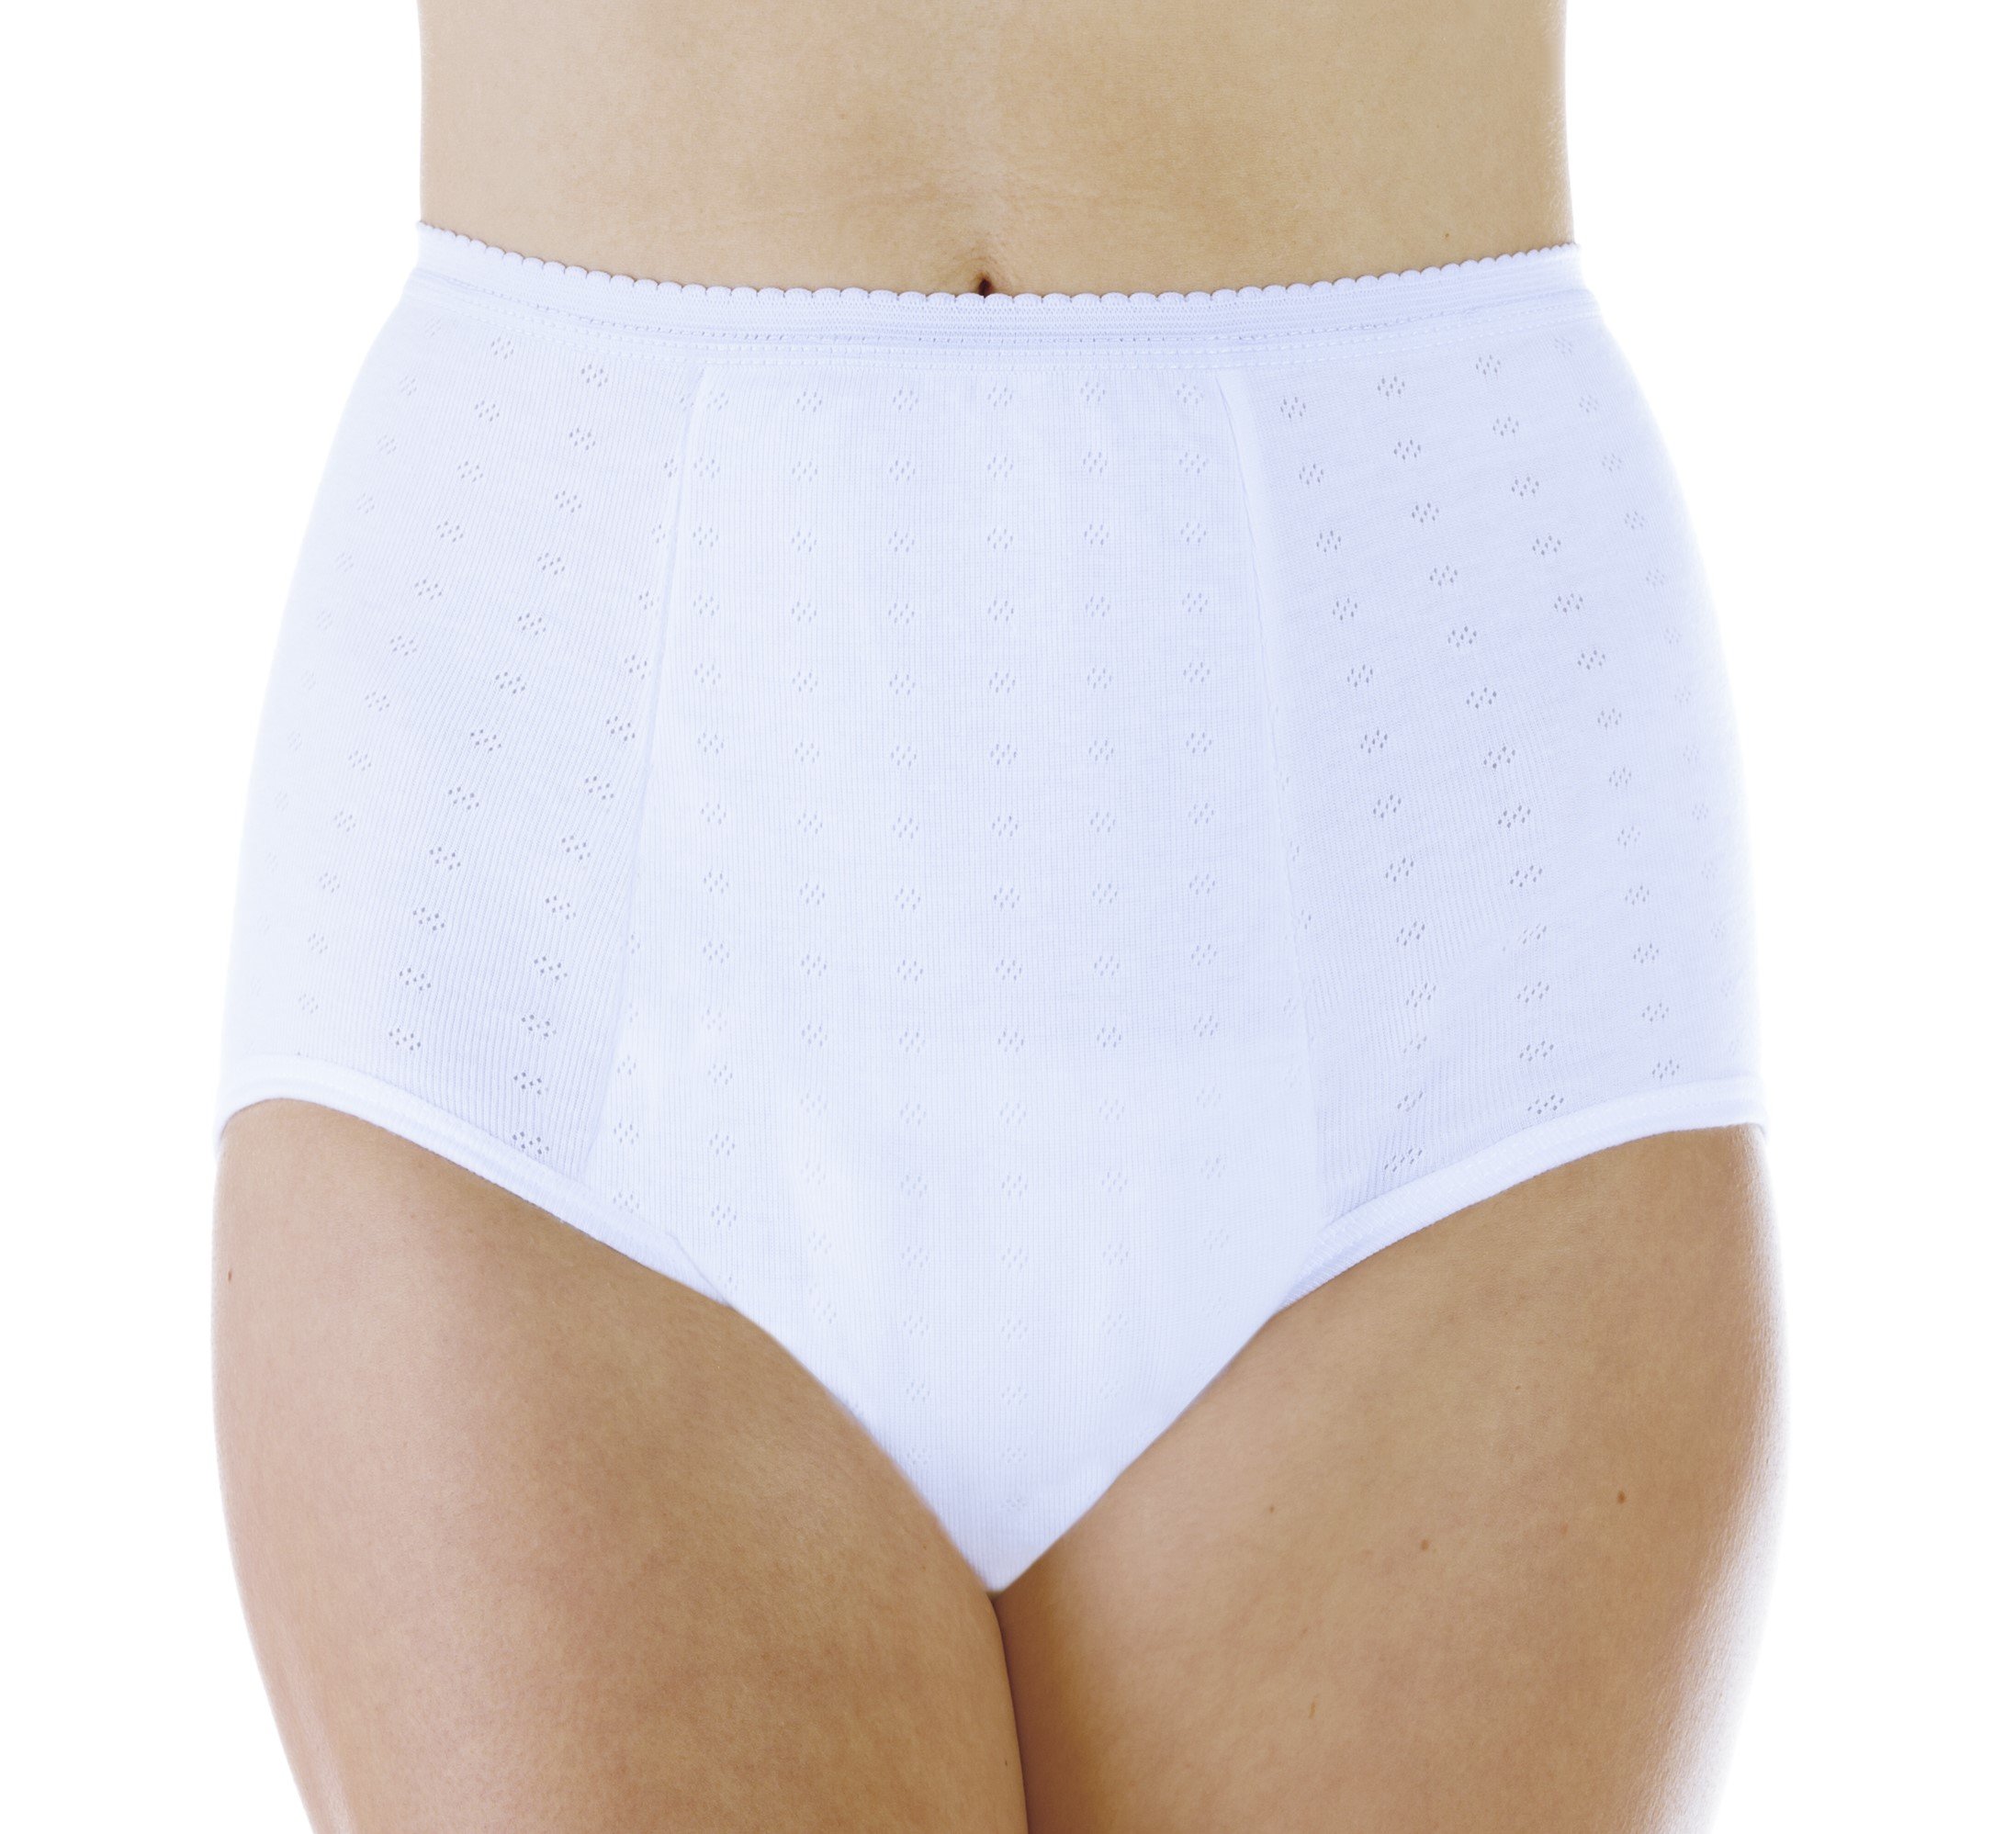  Allbase Incontinence Underwear for Women High